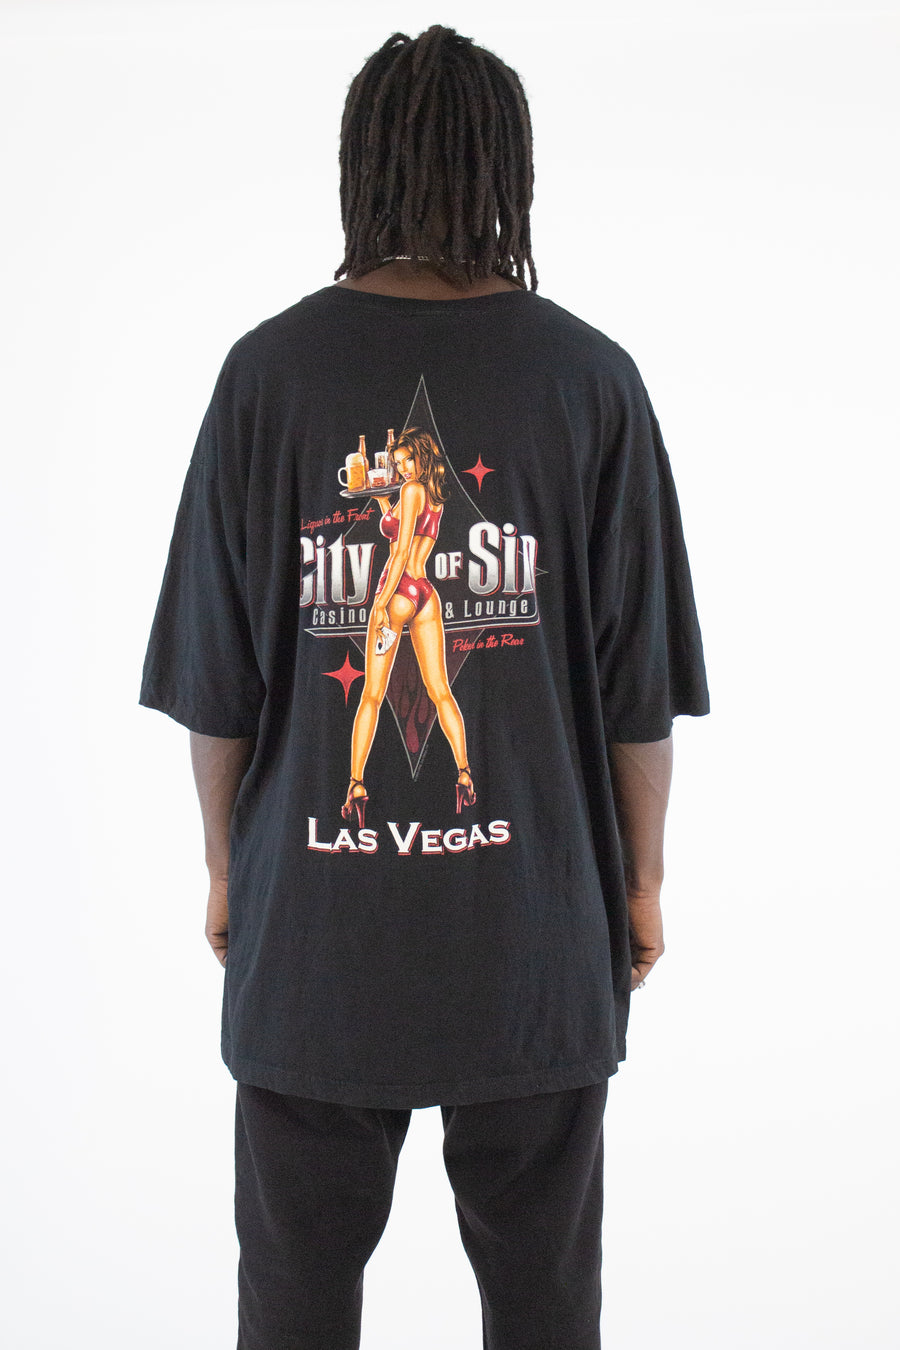 Las Vegas City of Sin 2008 Poker T-shirt in Black